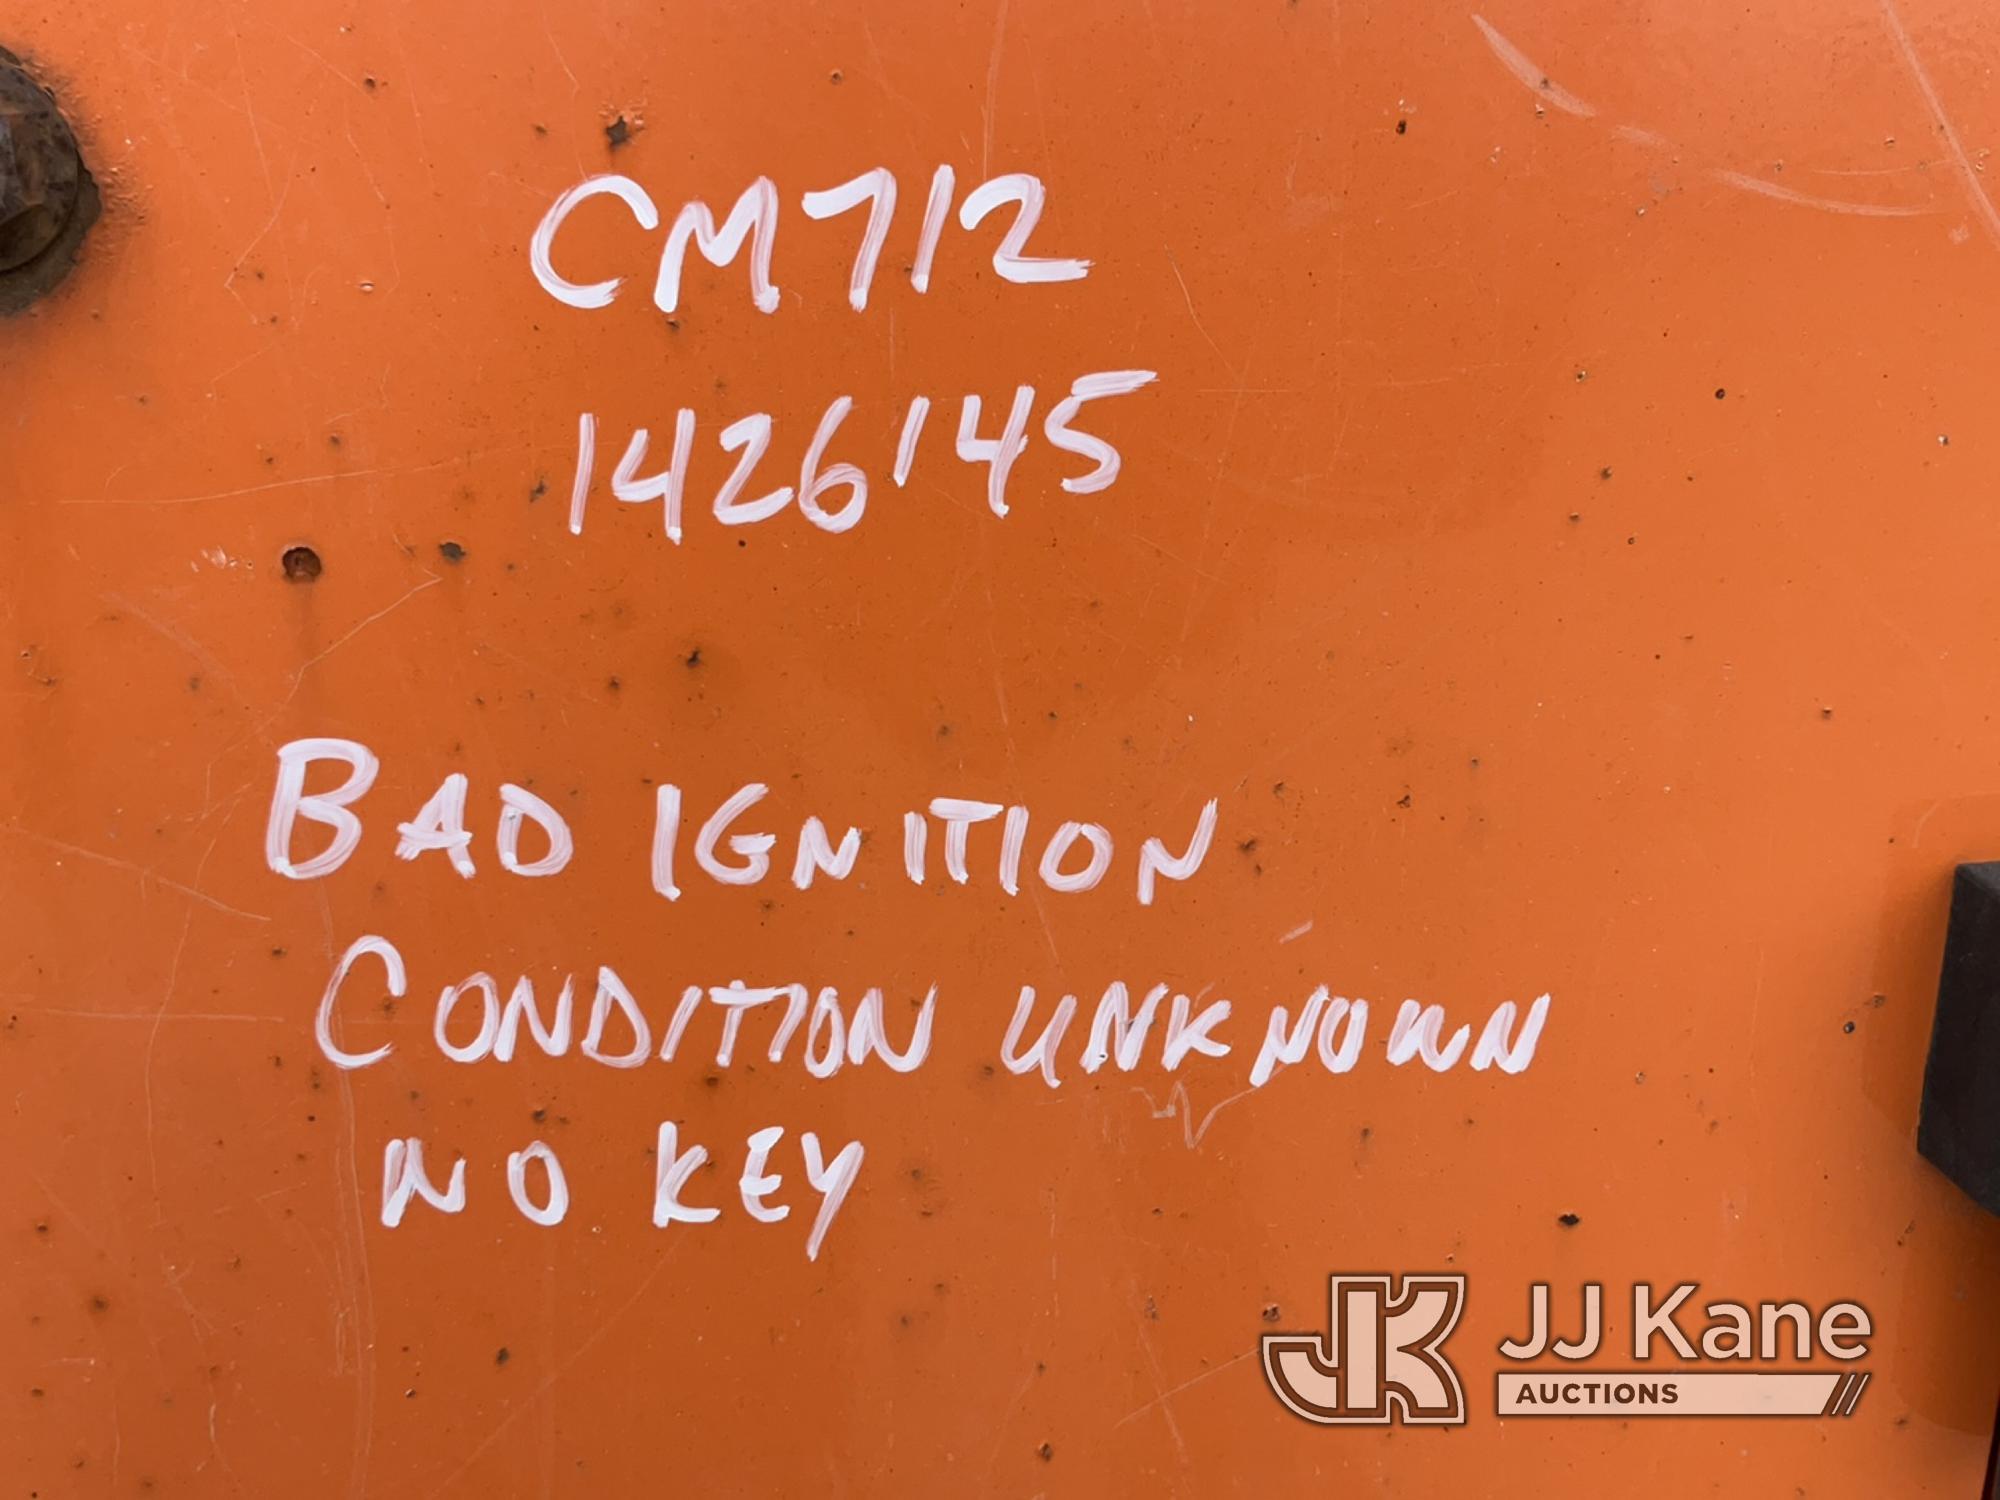 (Charlotte, MI) 2015 Vermeer BC1000XL Chipper (12in Drum) Condition Unknown, Bad Ignition, No Key